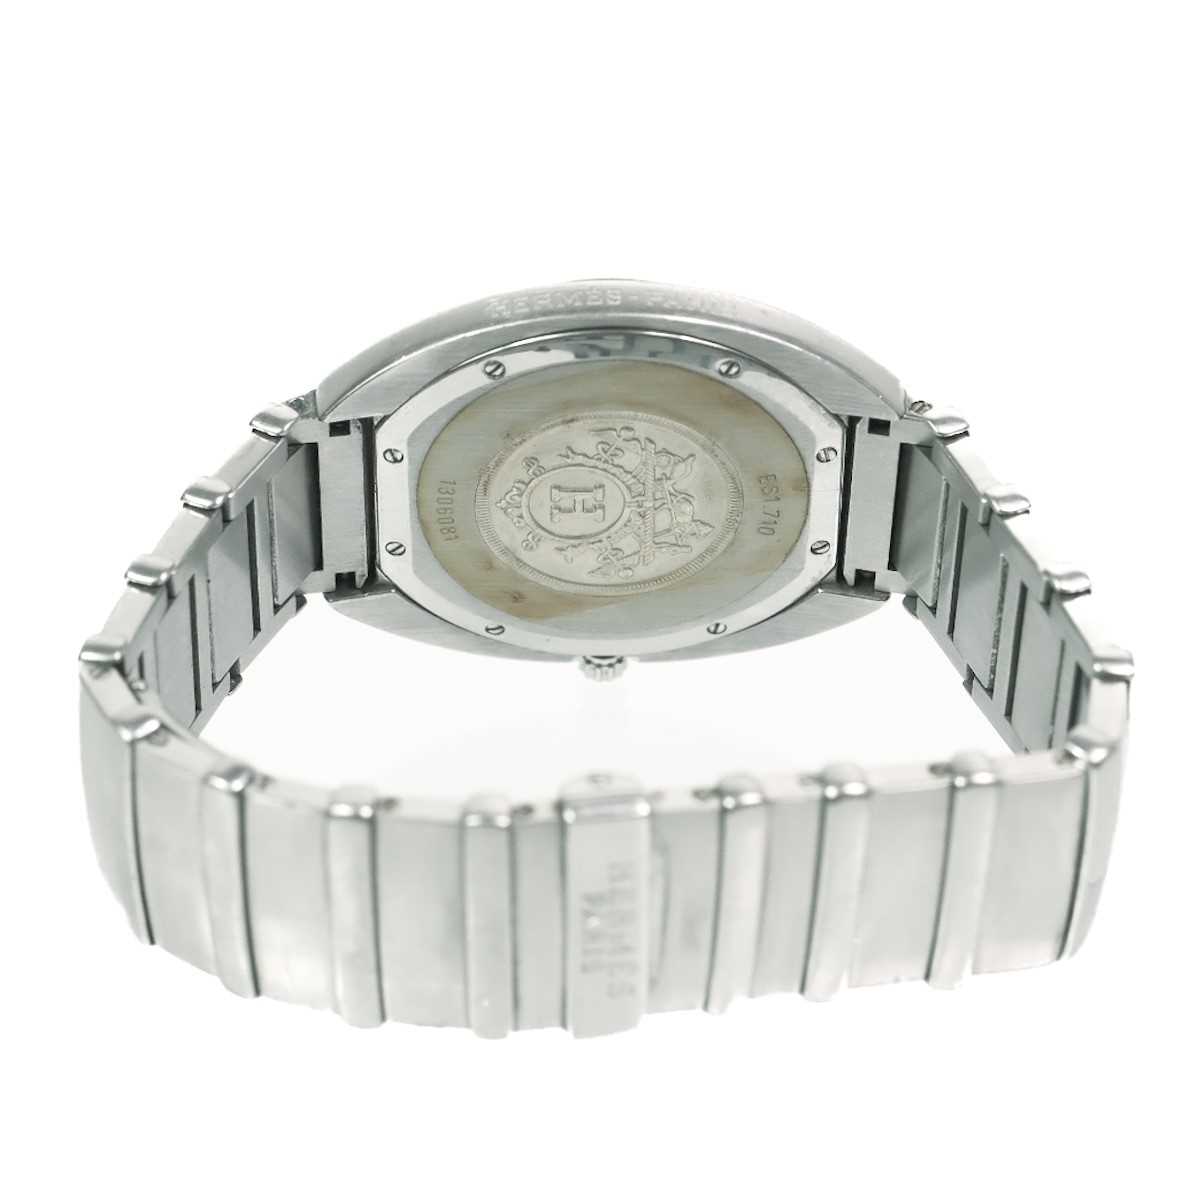 A Hermes Espace gentleman's quartz stainless steel bracelet wristwatch. - Image 4 of 4